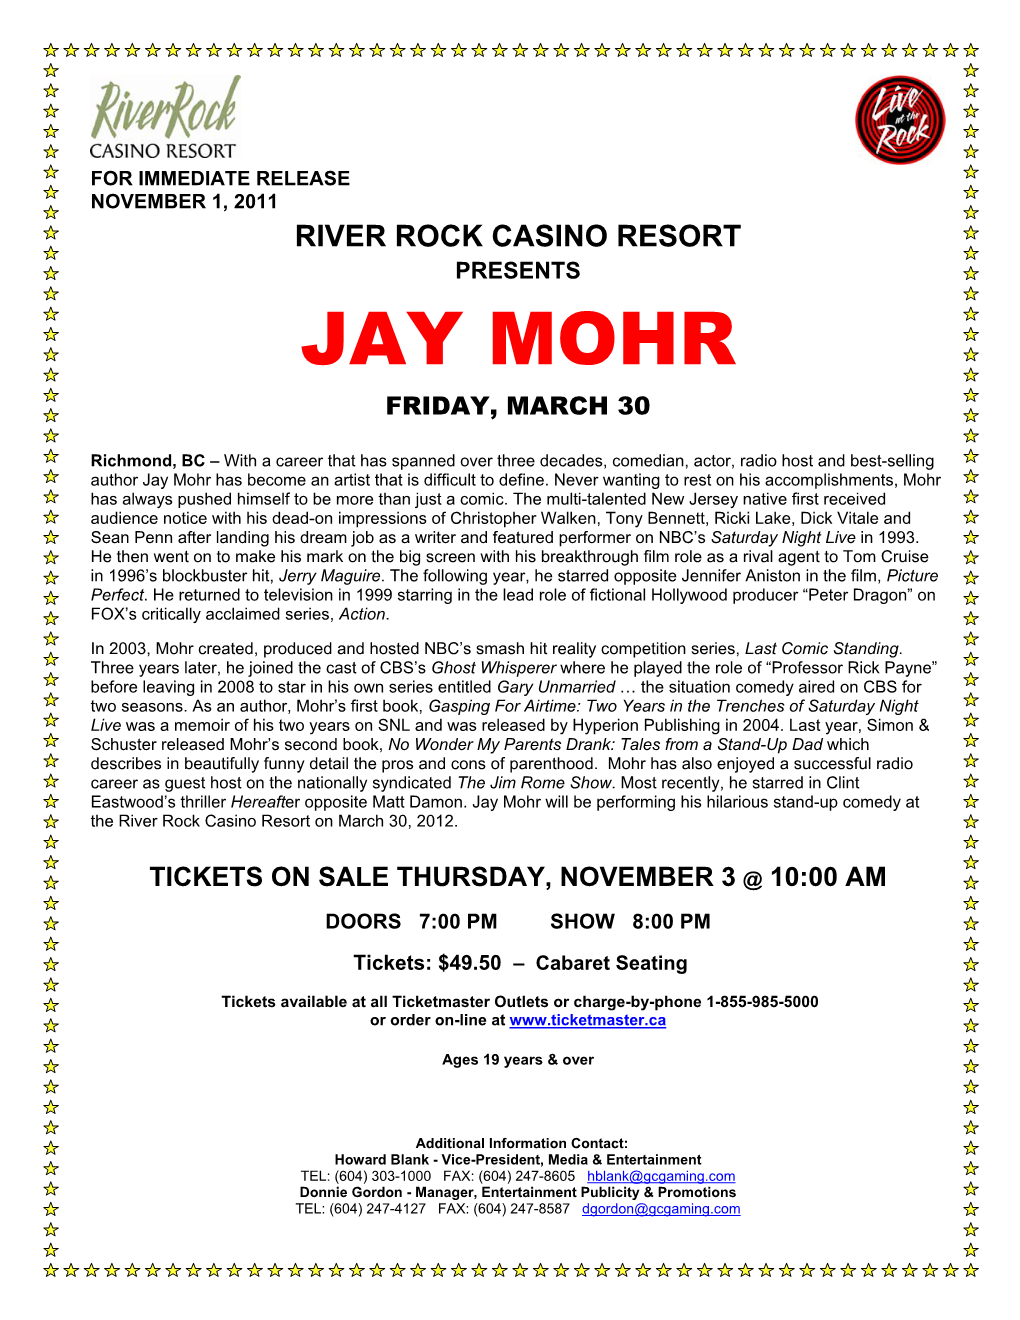 Jay Mohr Friday, March 30